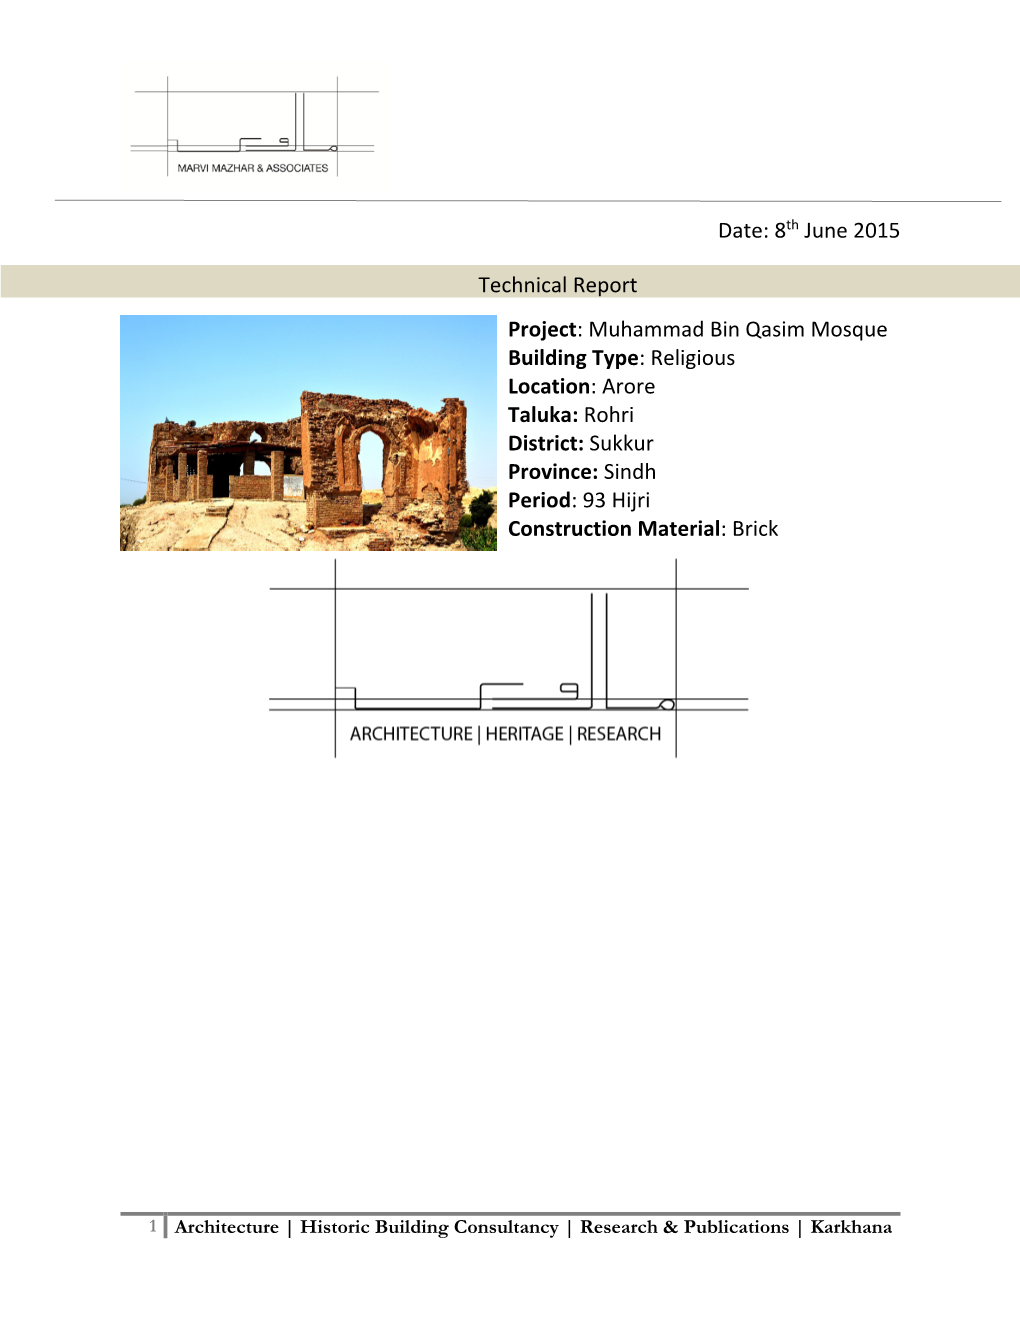 Muhammad Bin Qasim Mosque Building Type: Religious Location: Arore Taluka: Rohri District: Sukkur Province: Sindh Period: 93 Hijri Construction Material: Brick